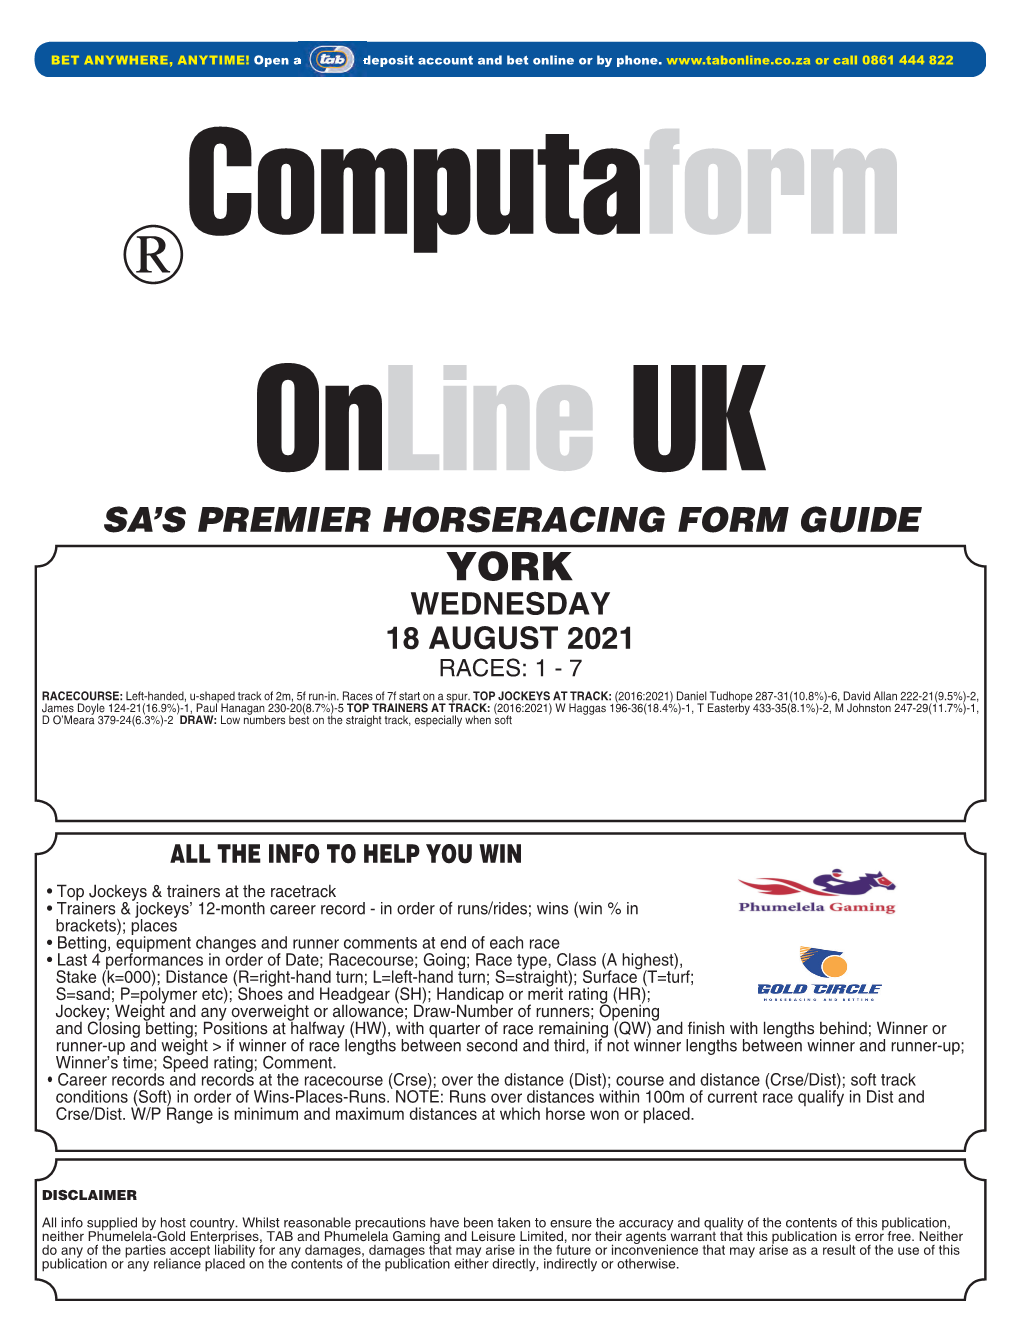 Sa's Premier Horseracing Form Guide